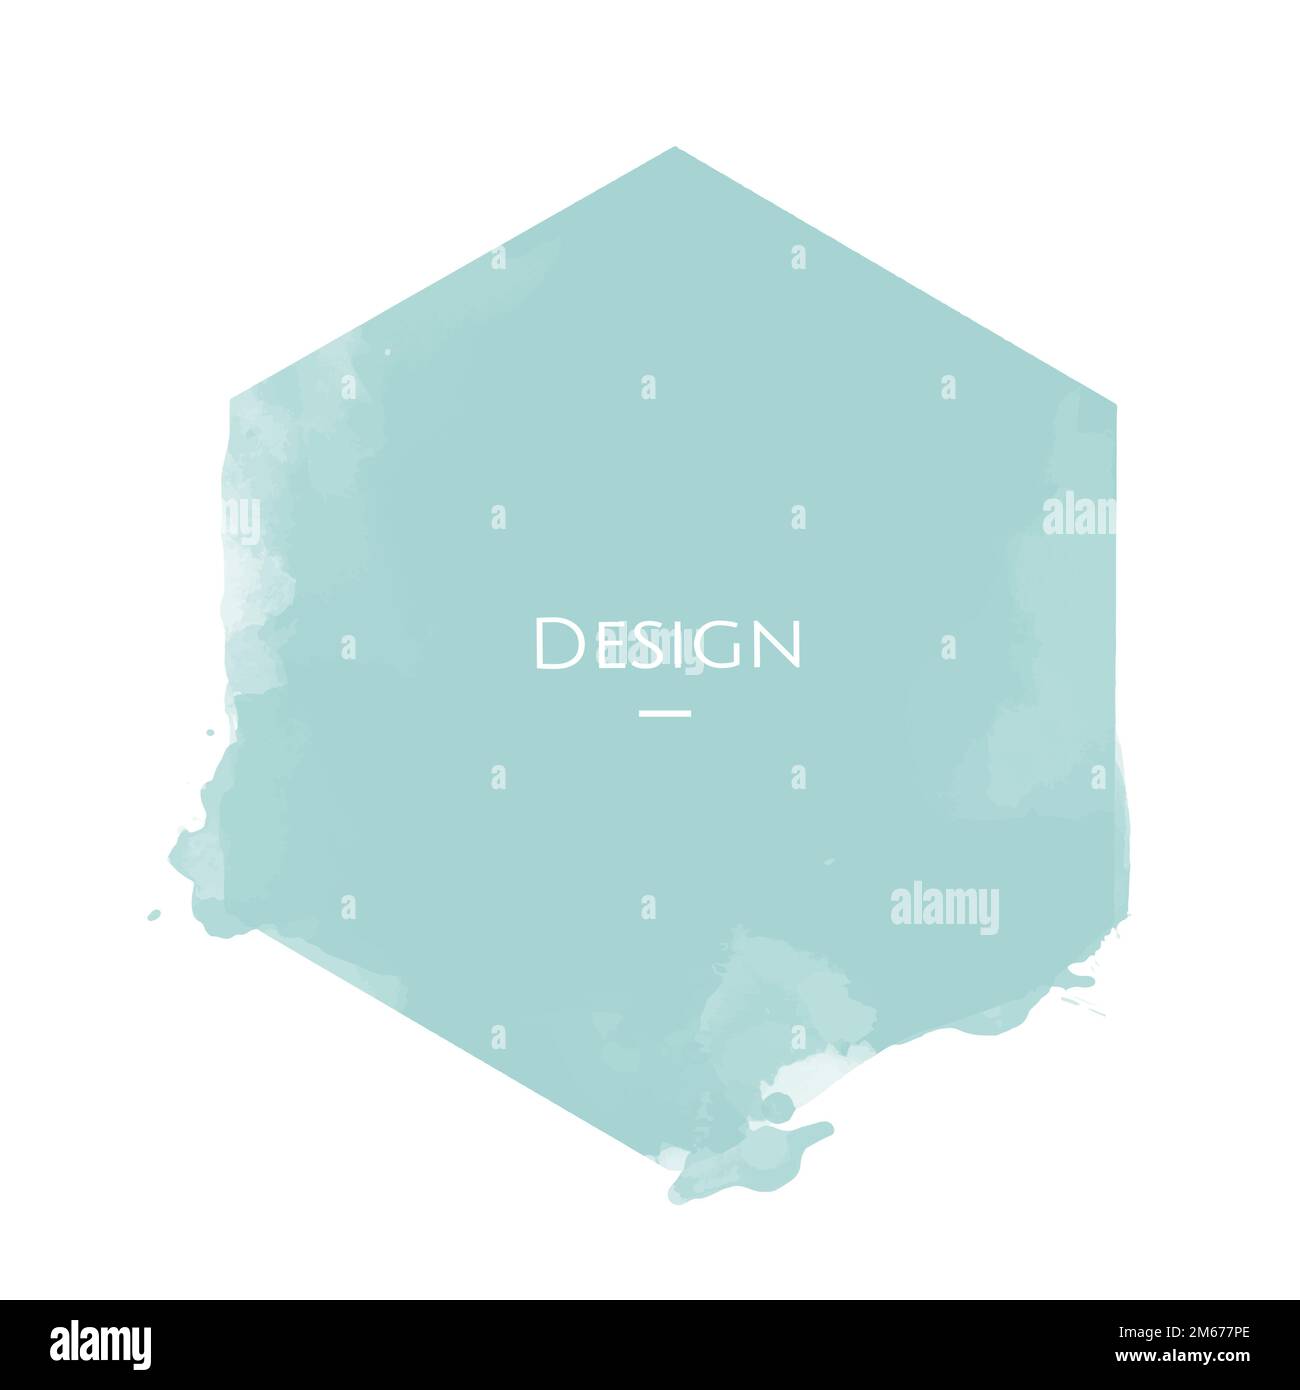 Announcement hexagon Badge template design illustration Stock Vector